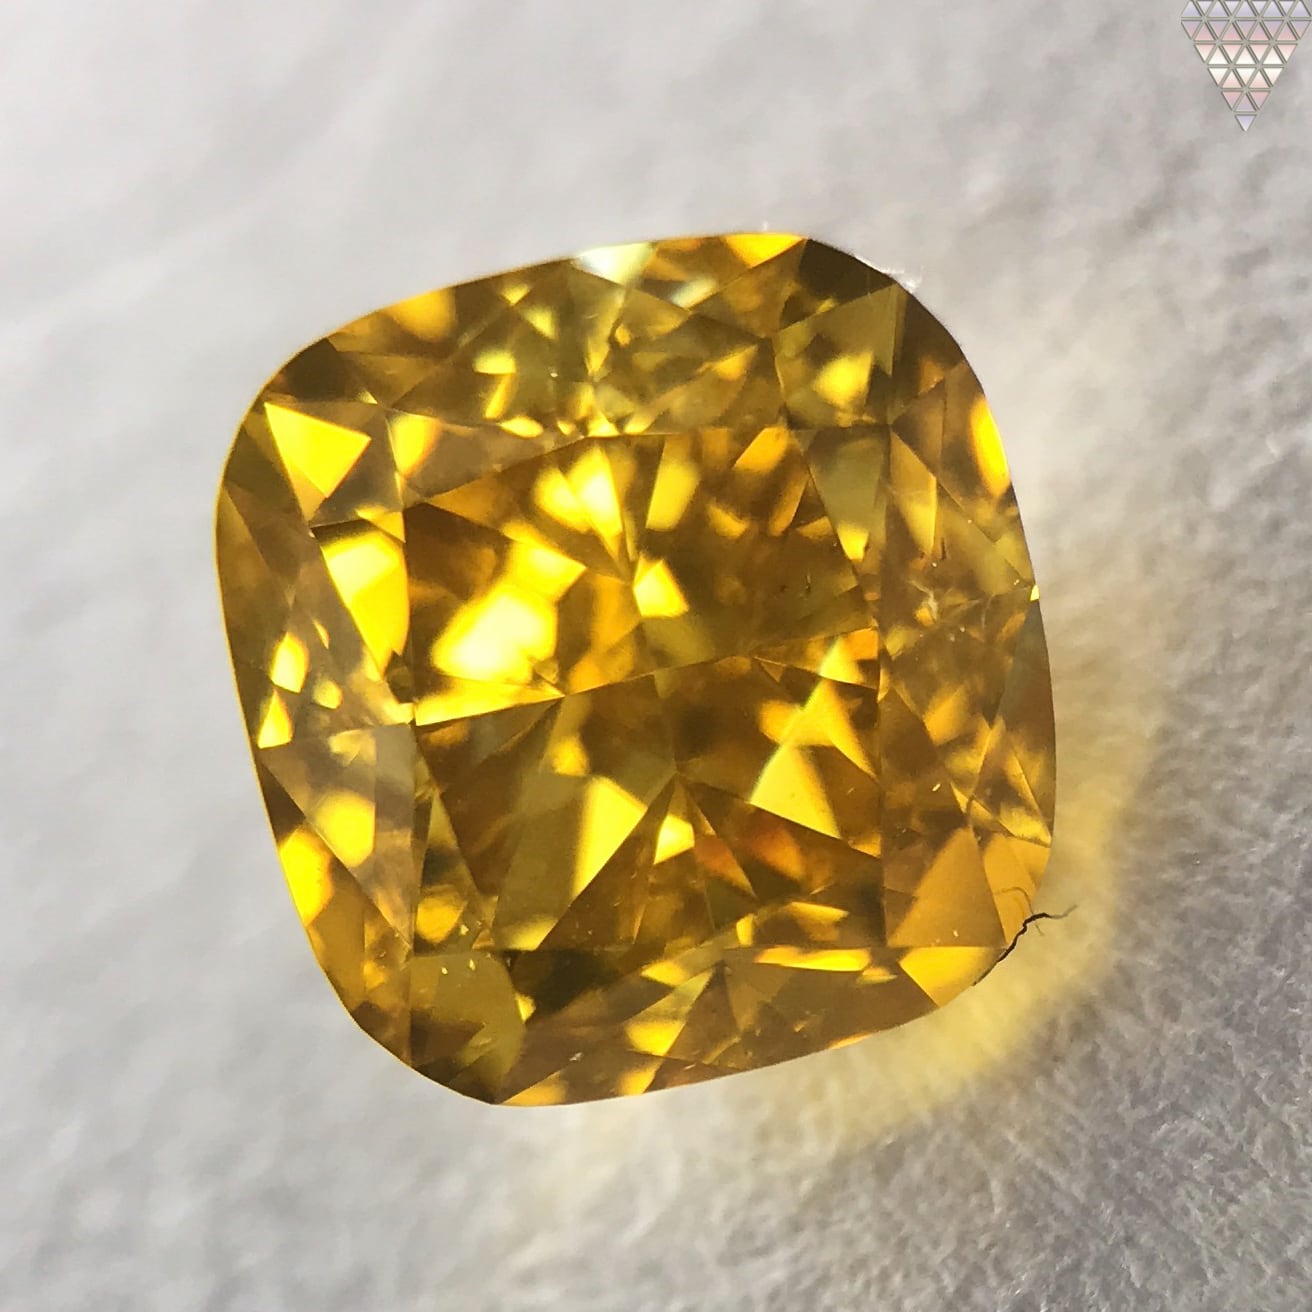 YELLOW DIAMOND | DIAMOND EXCHANGE FEDERATION